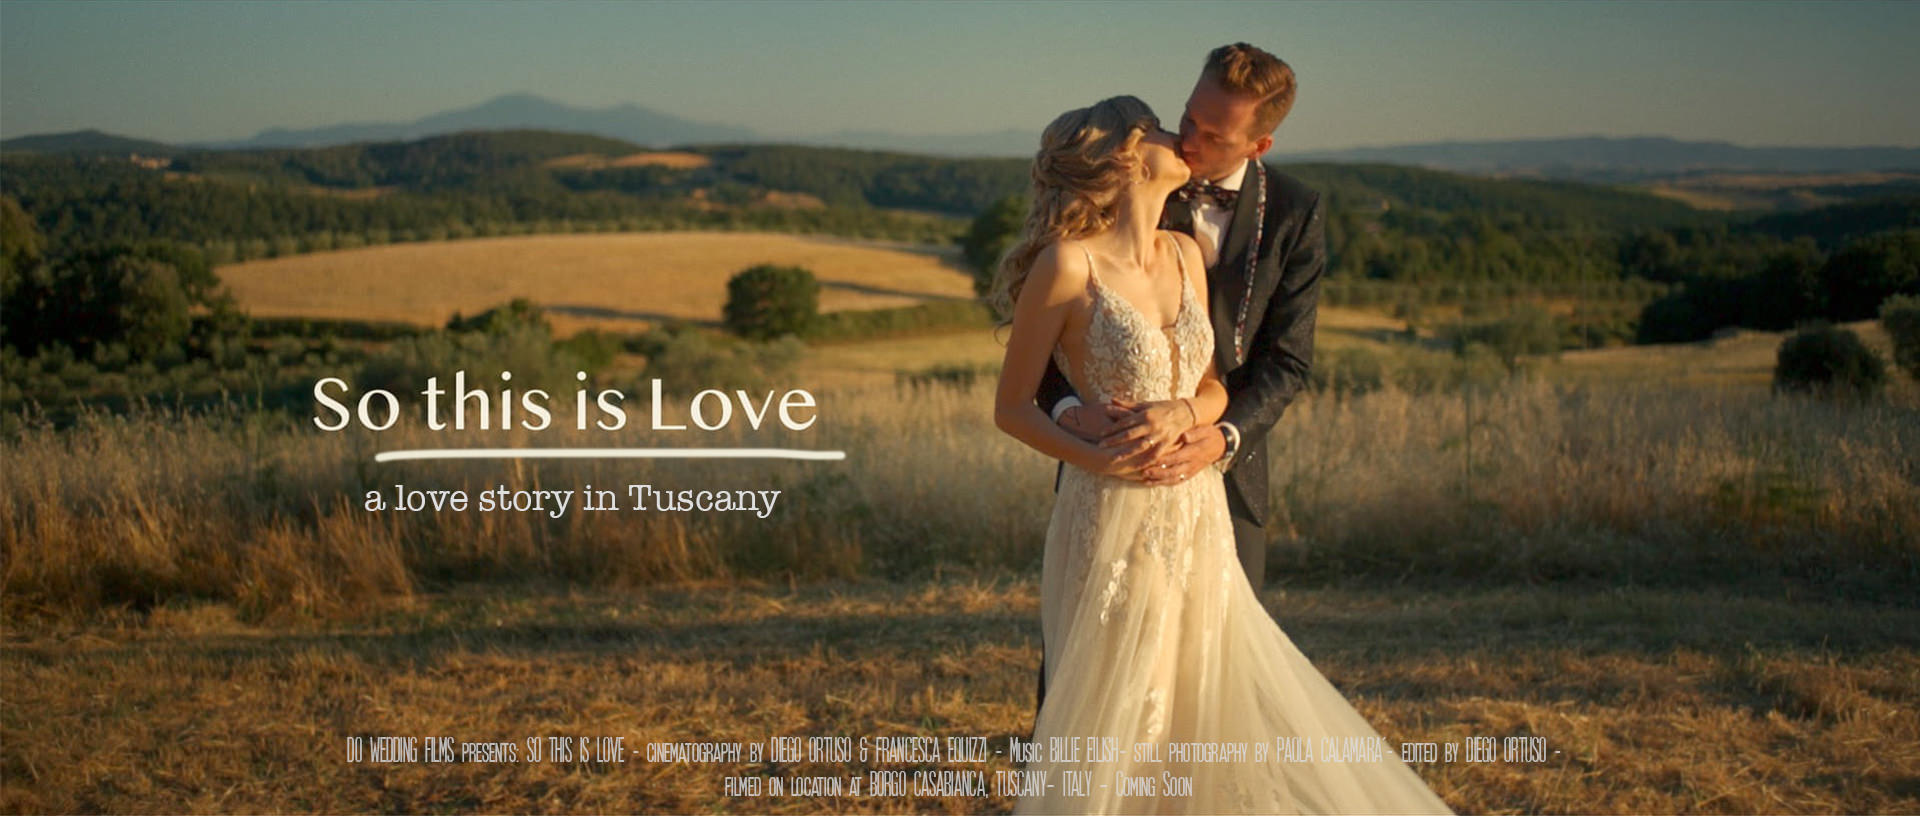 Romantic Tuscany wedding video